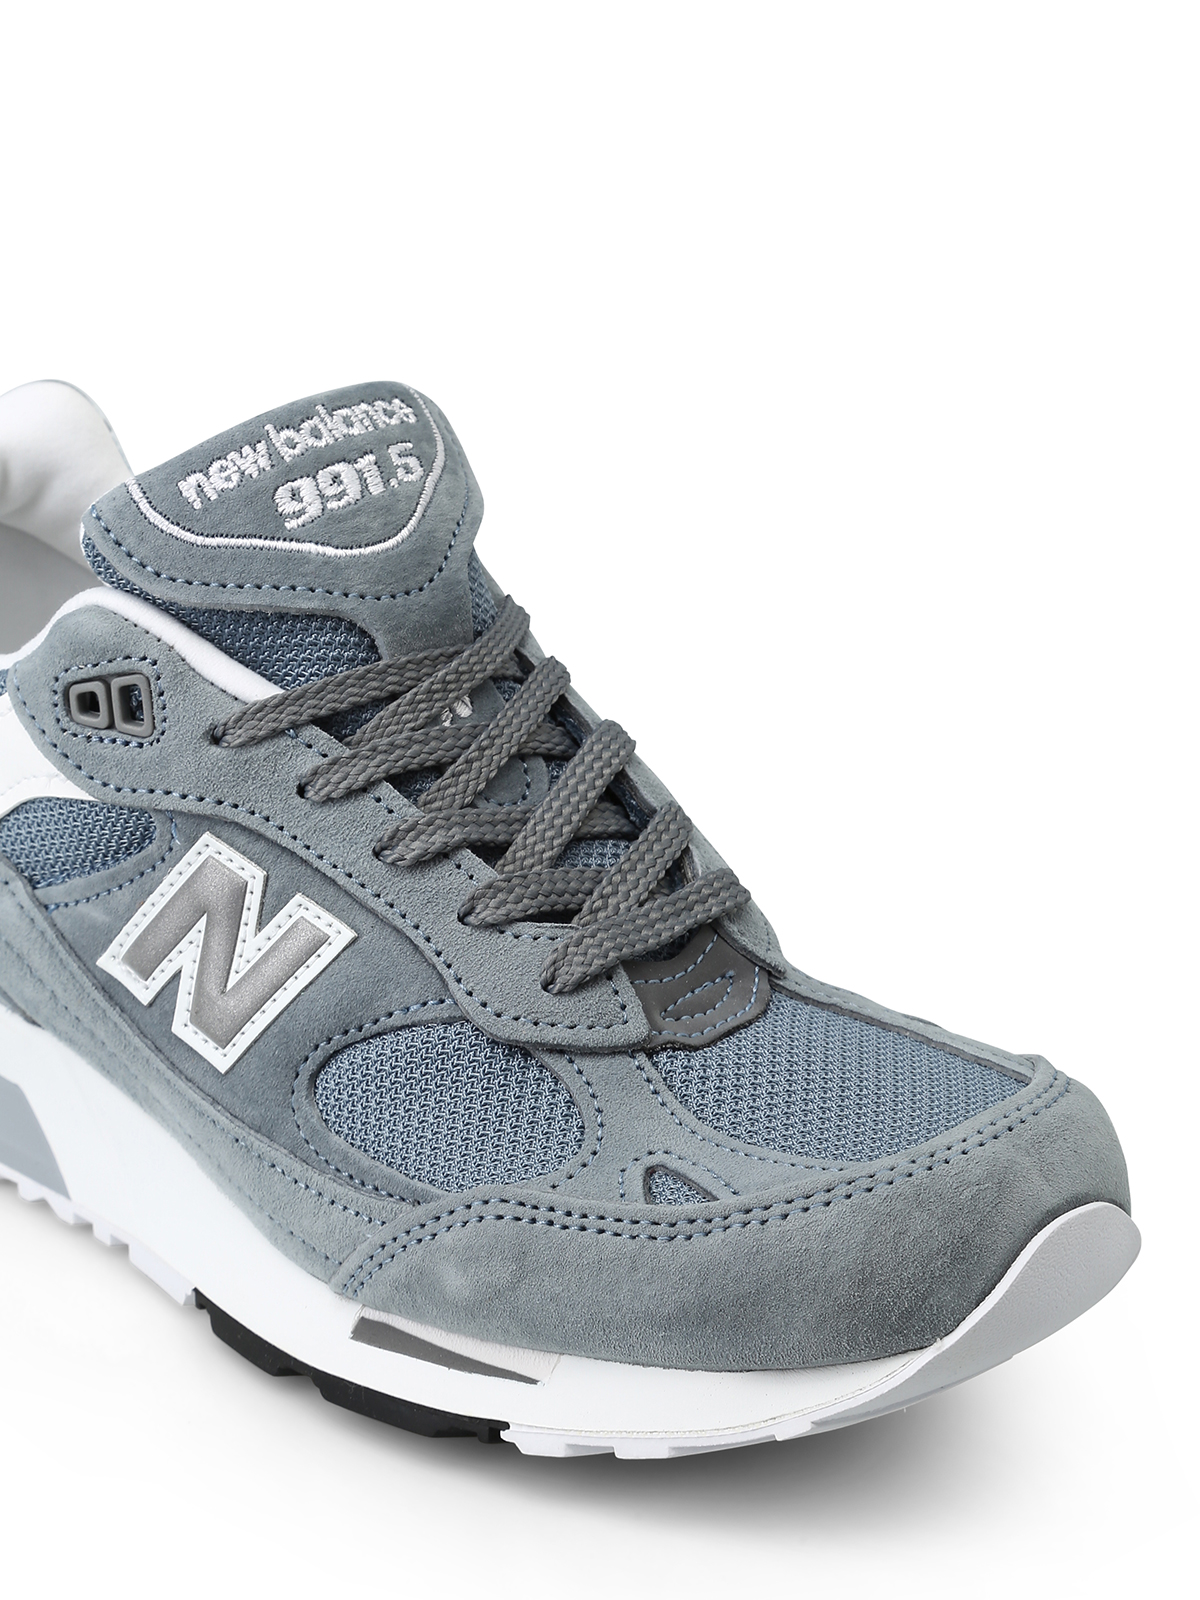 New Balance - Sneaker low top 991 grigio chiaro - sneakers - M9915LB